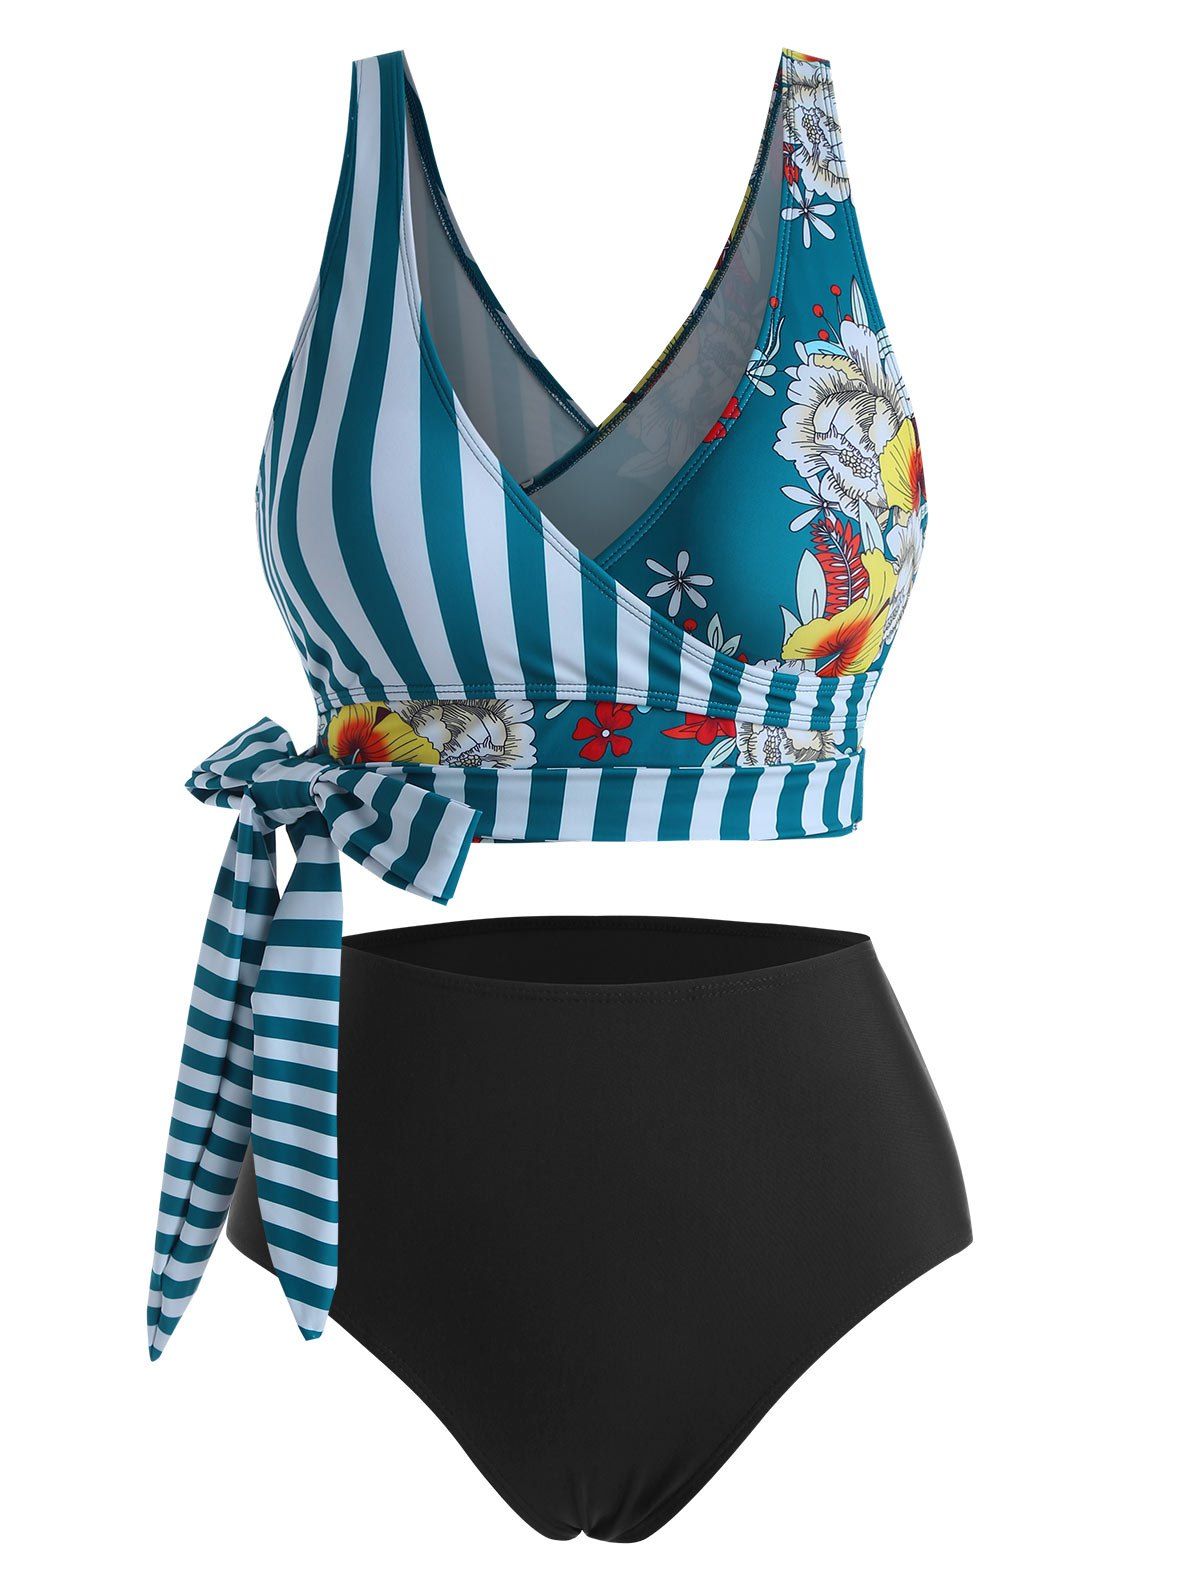 Striped Flower Swimsuit Full Coverage Surplice Knot Tankini Swimwear Set - BLUE L